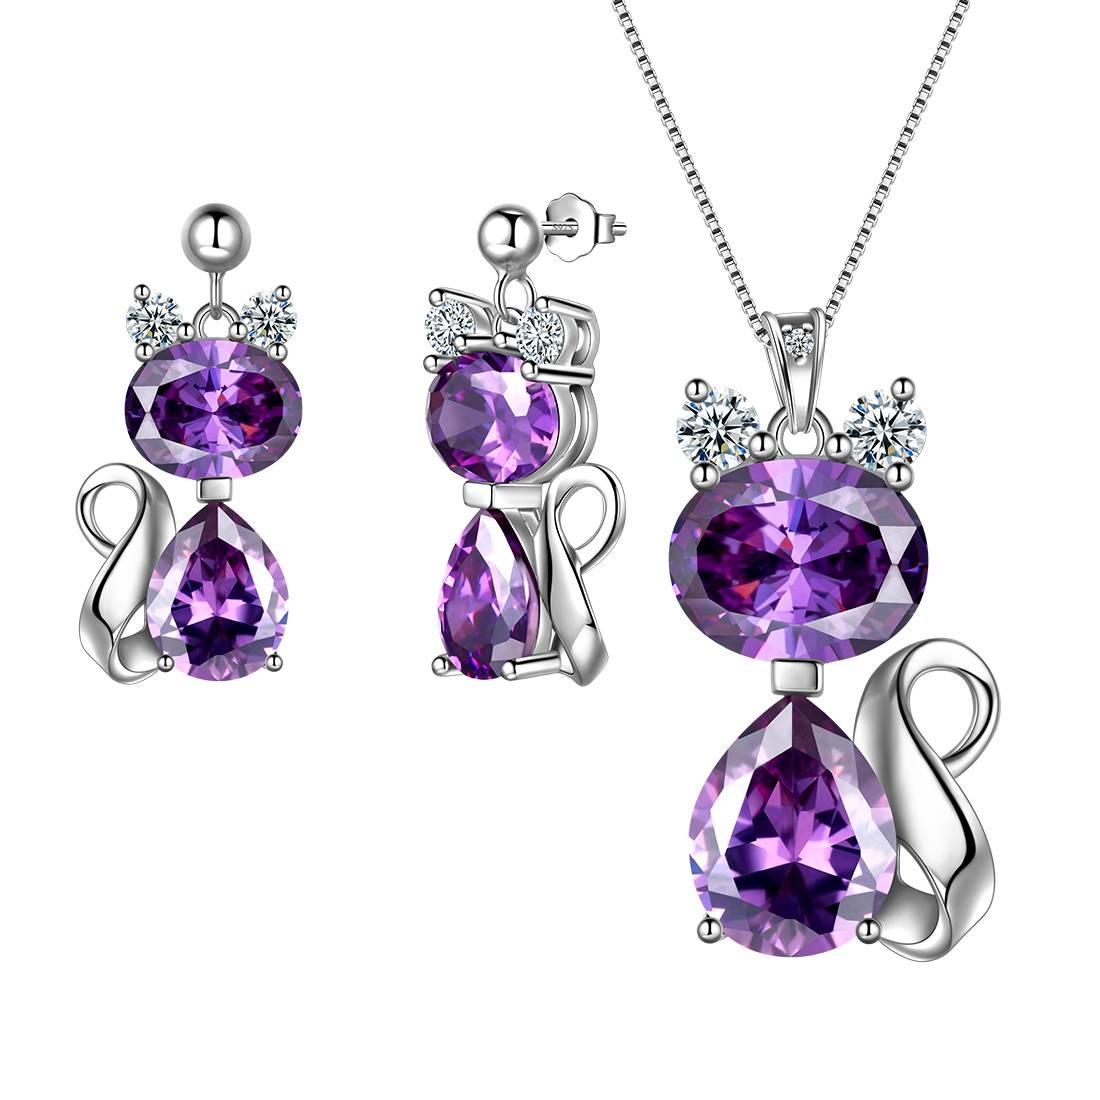 Cat Birthstone February Amethyst Necklace Earring Jewelry Set